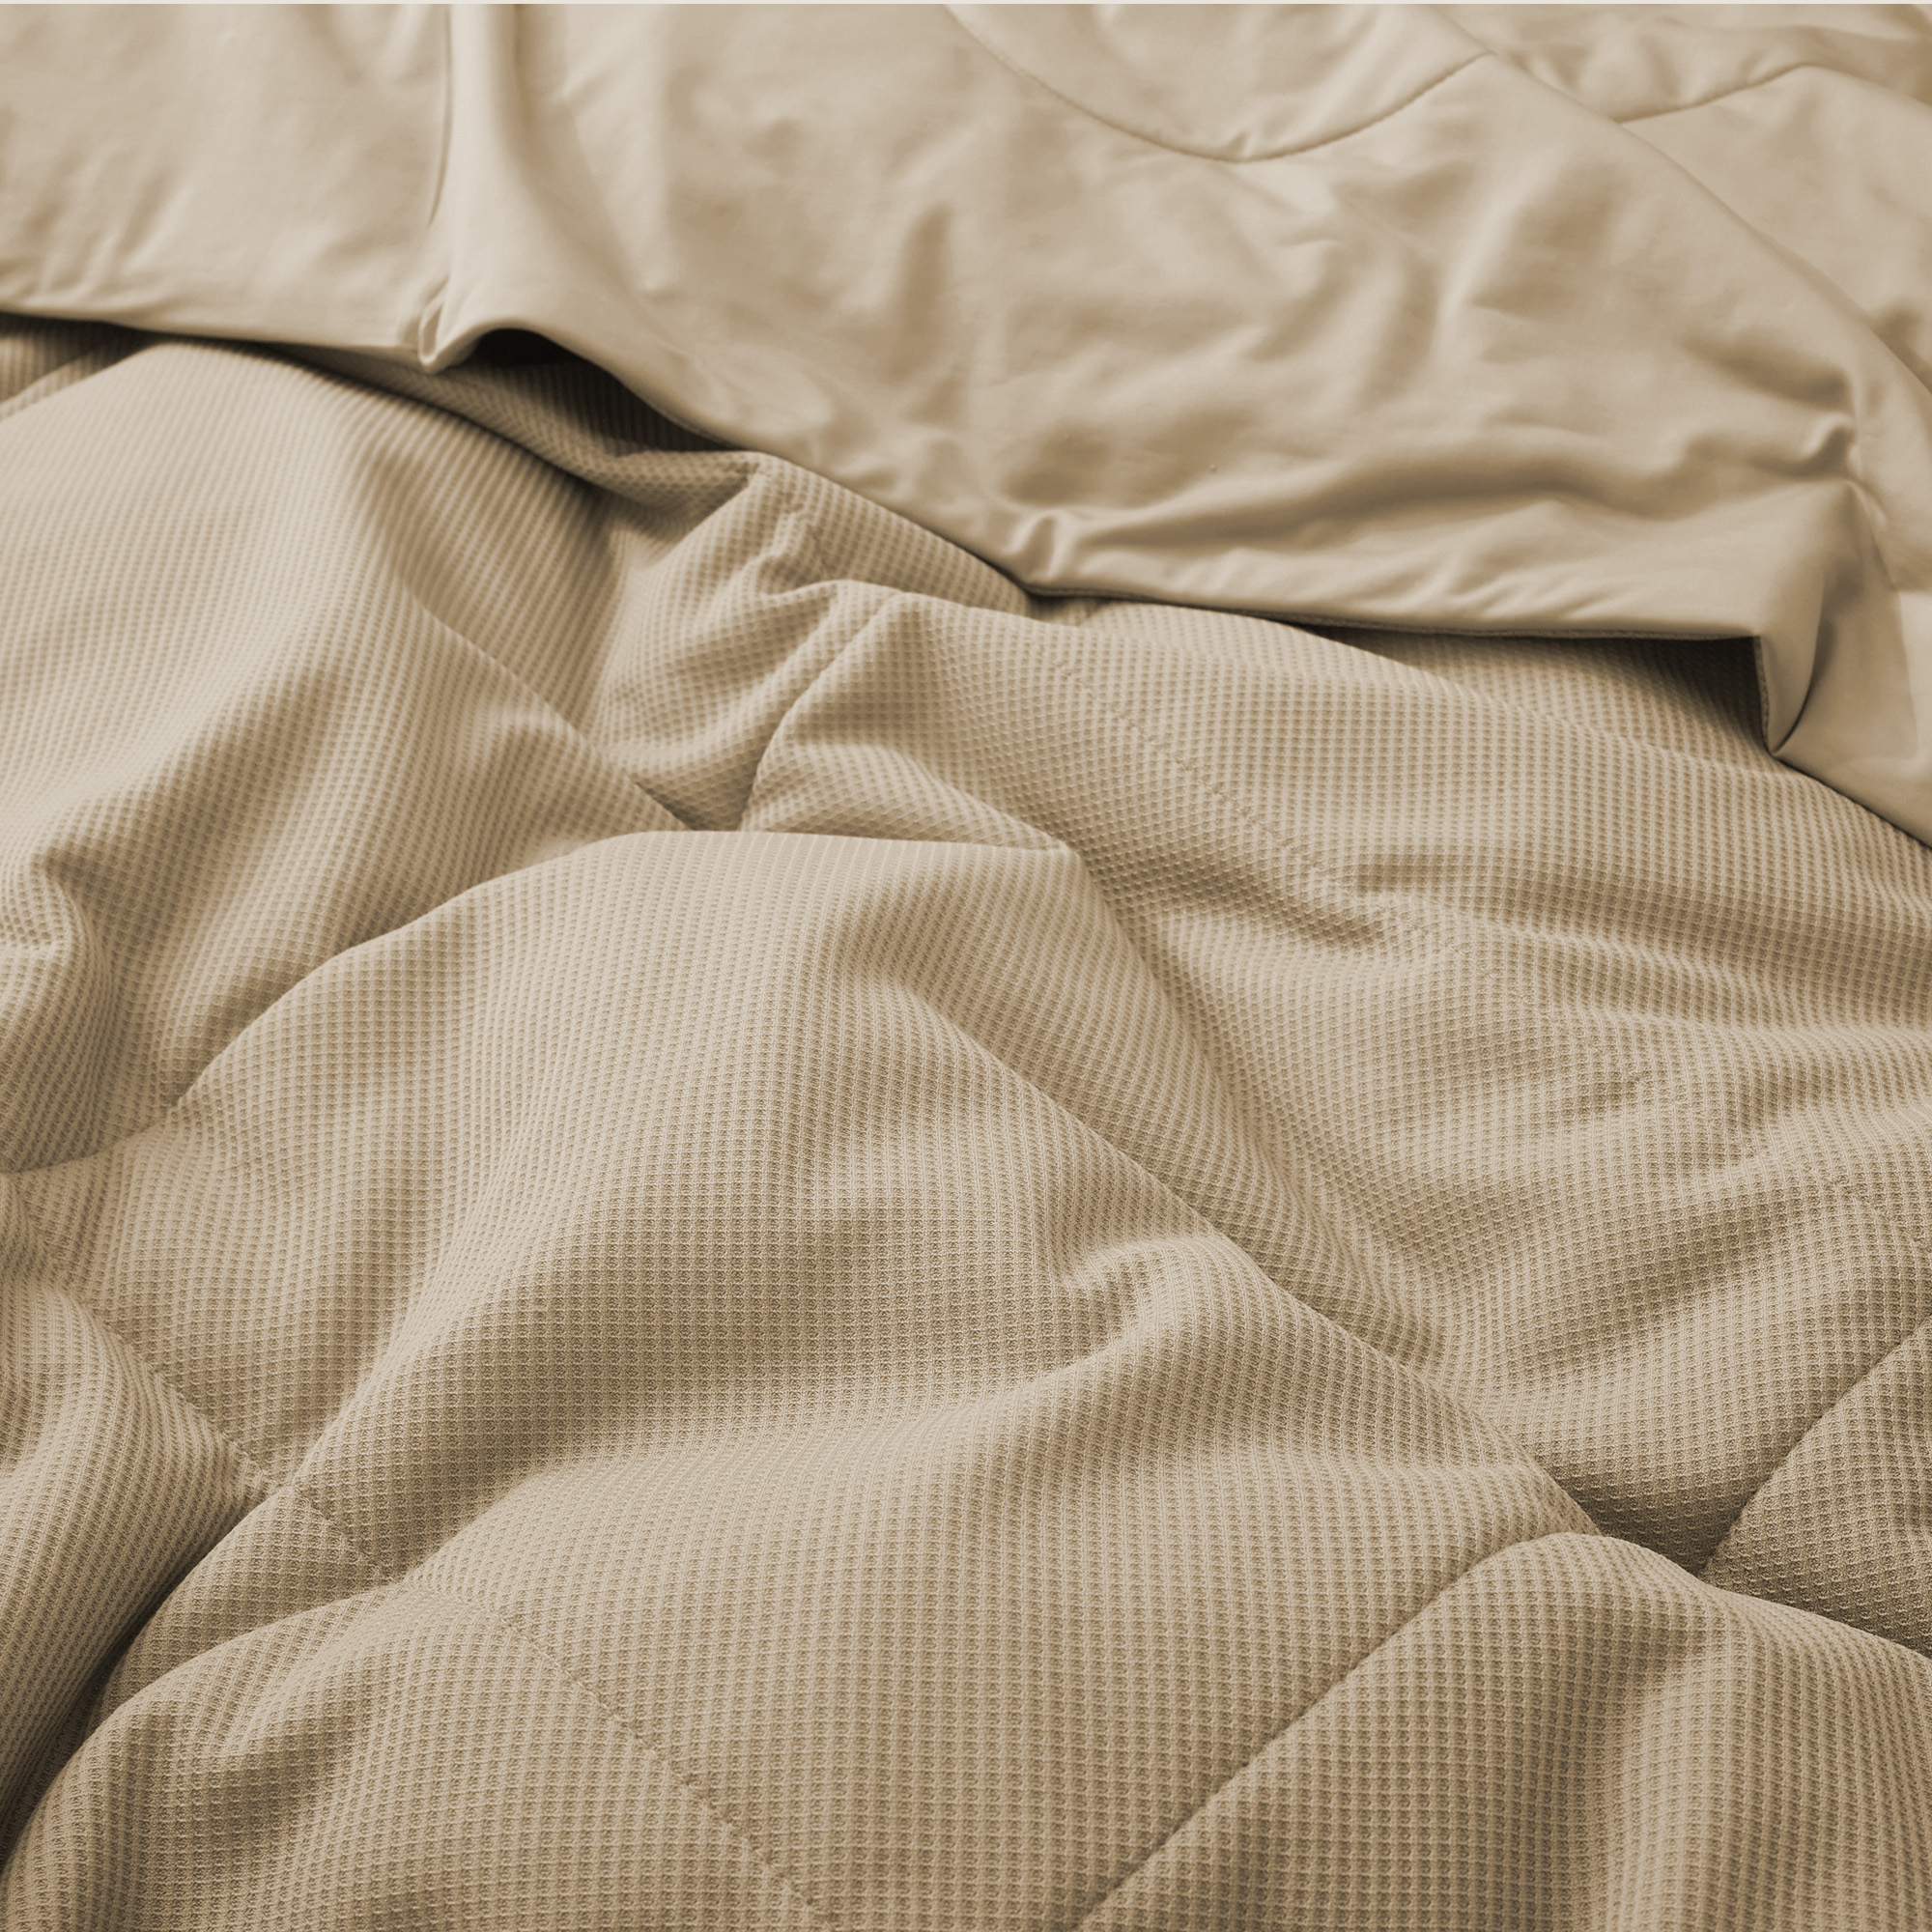 Reversible Blanket Twin Lightweight Blanket For Sleeping, Khaki, 68 X 90